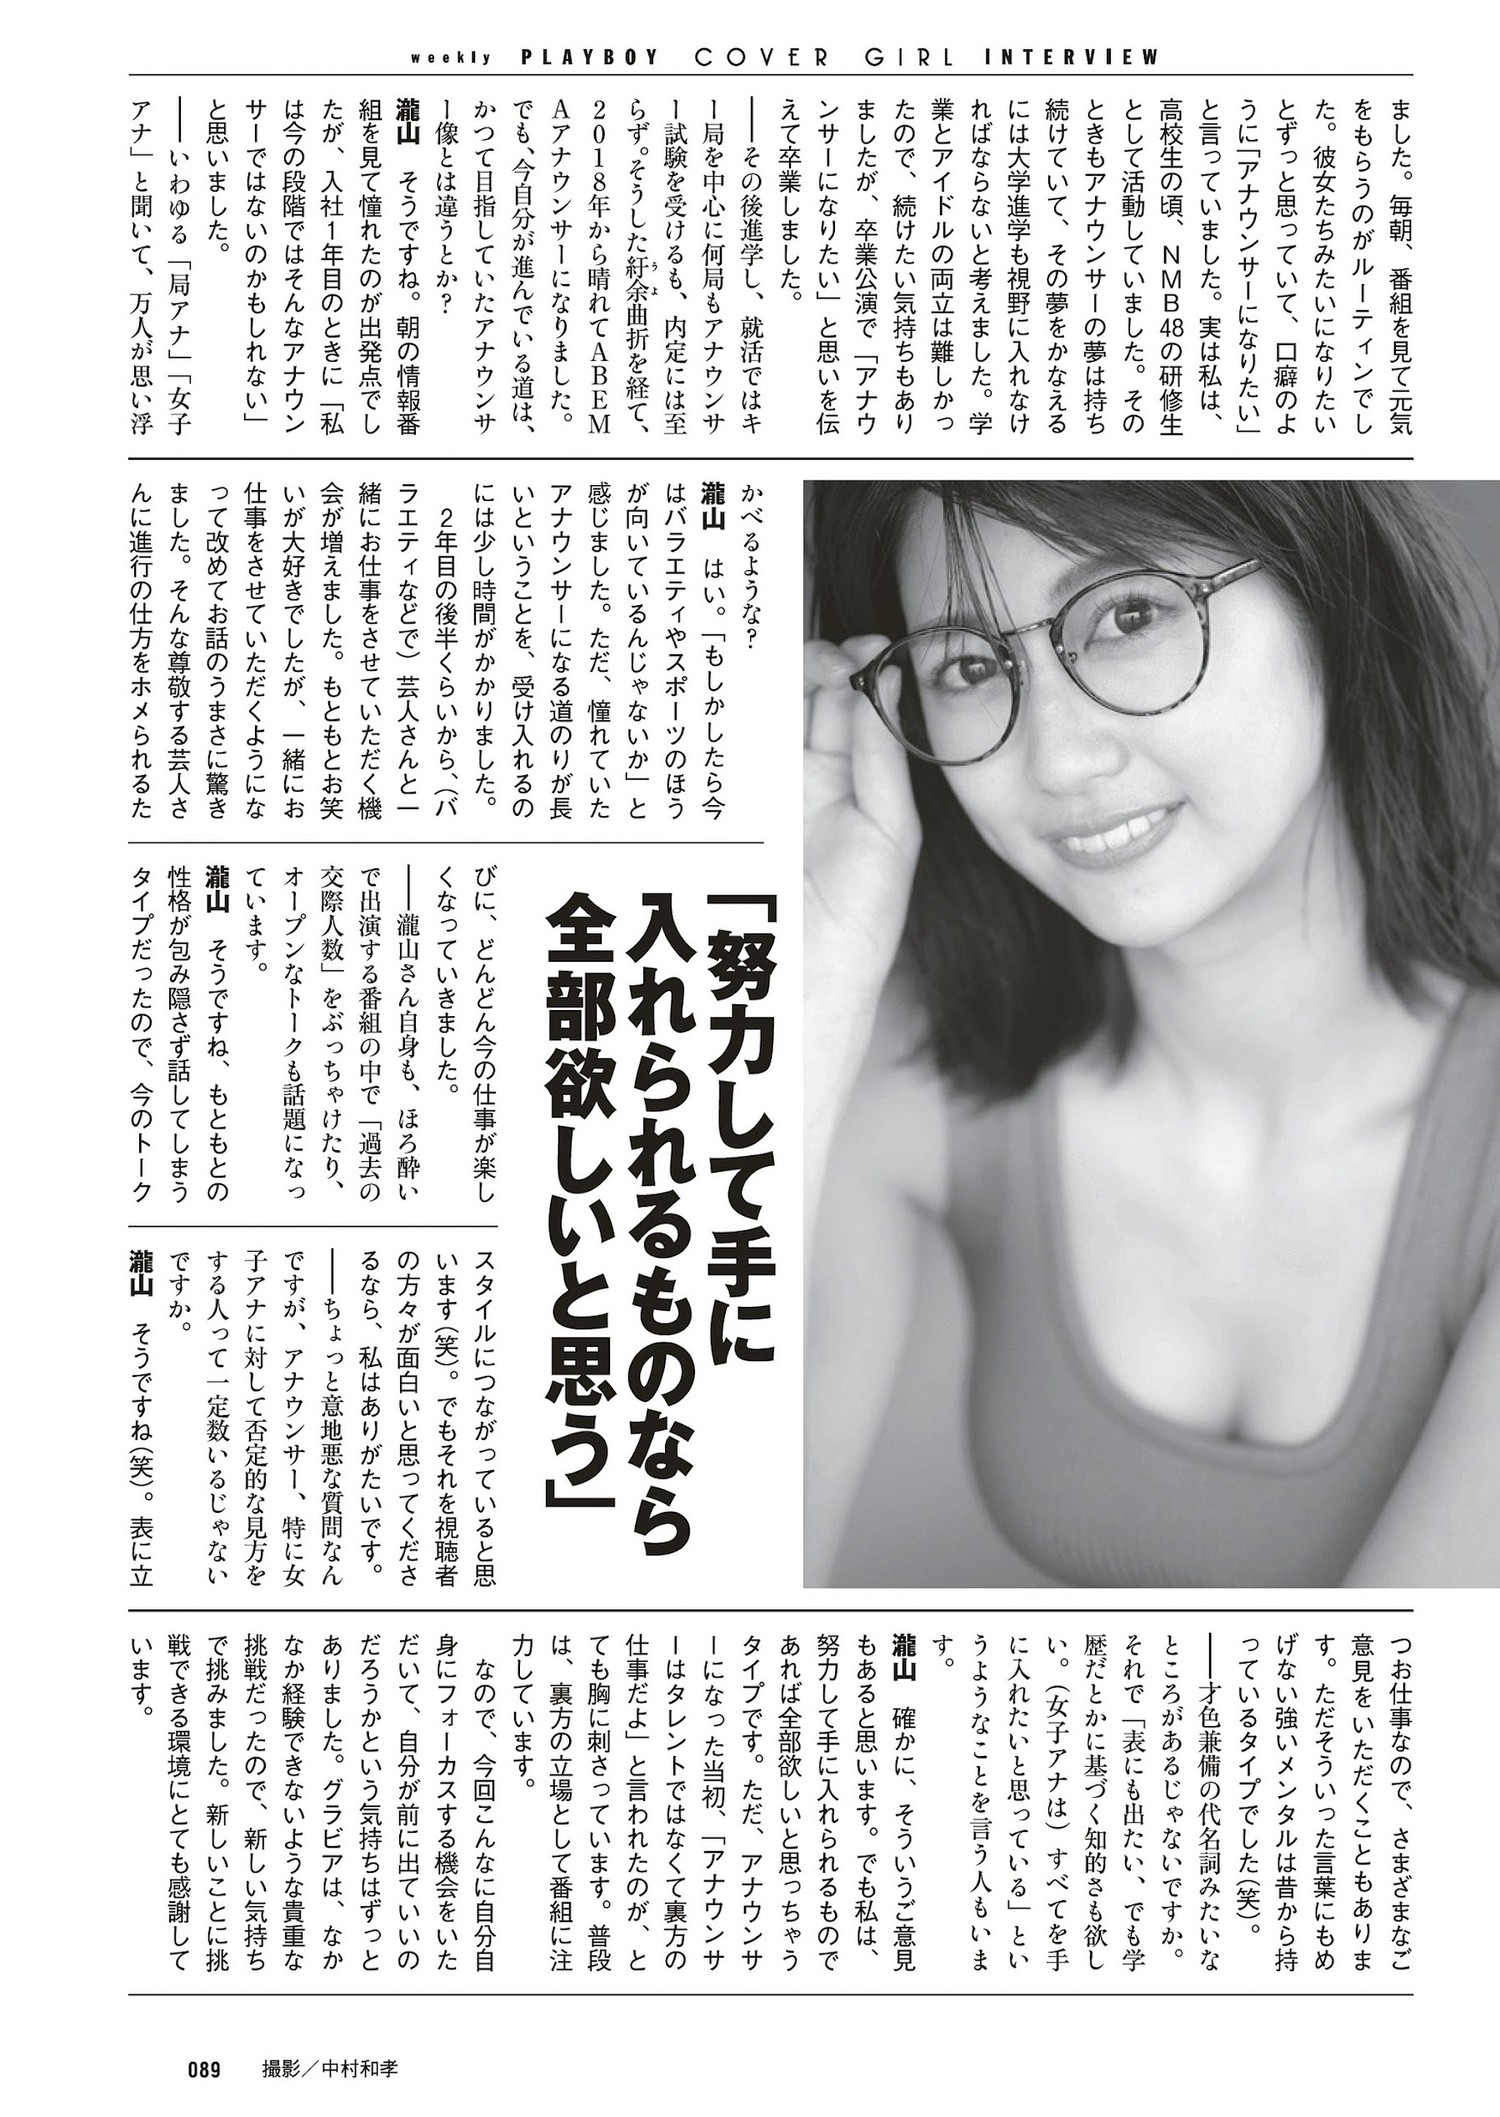 Akane Takiyama 瀧山あかね, Weekly Playboy 2023 No.23 (週刊プレイボーイ 2023年23号)